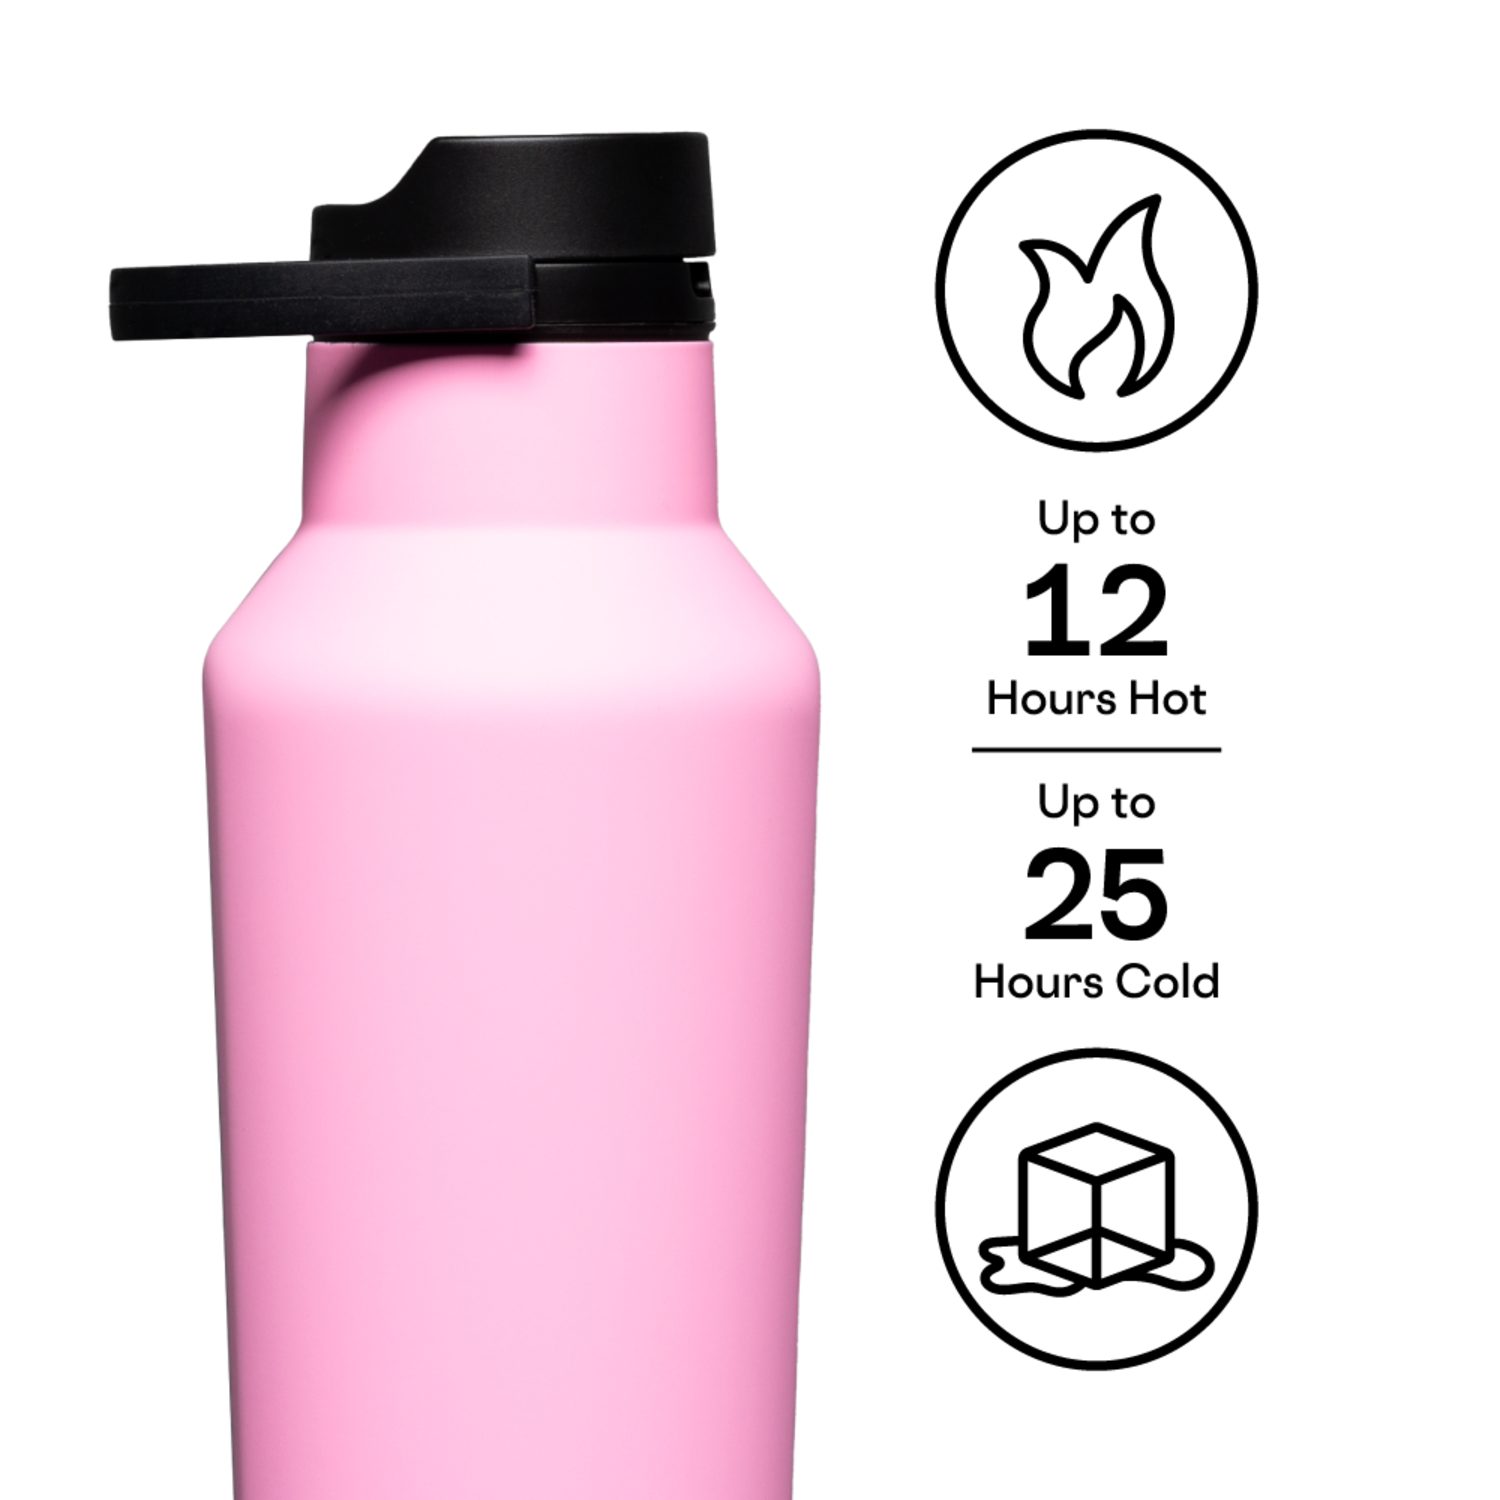 32oz. Water Bottle, Baby Pink